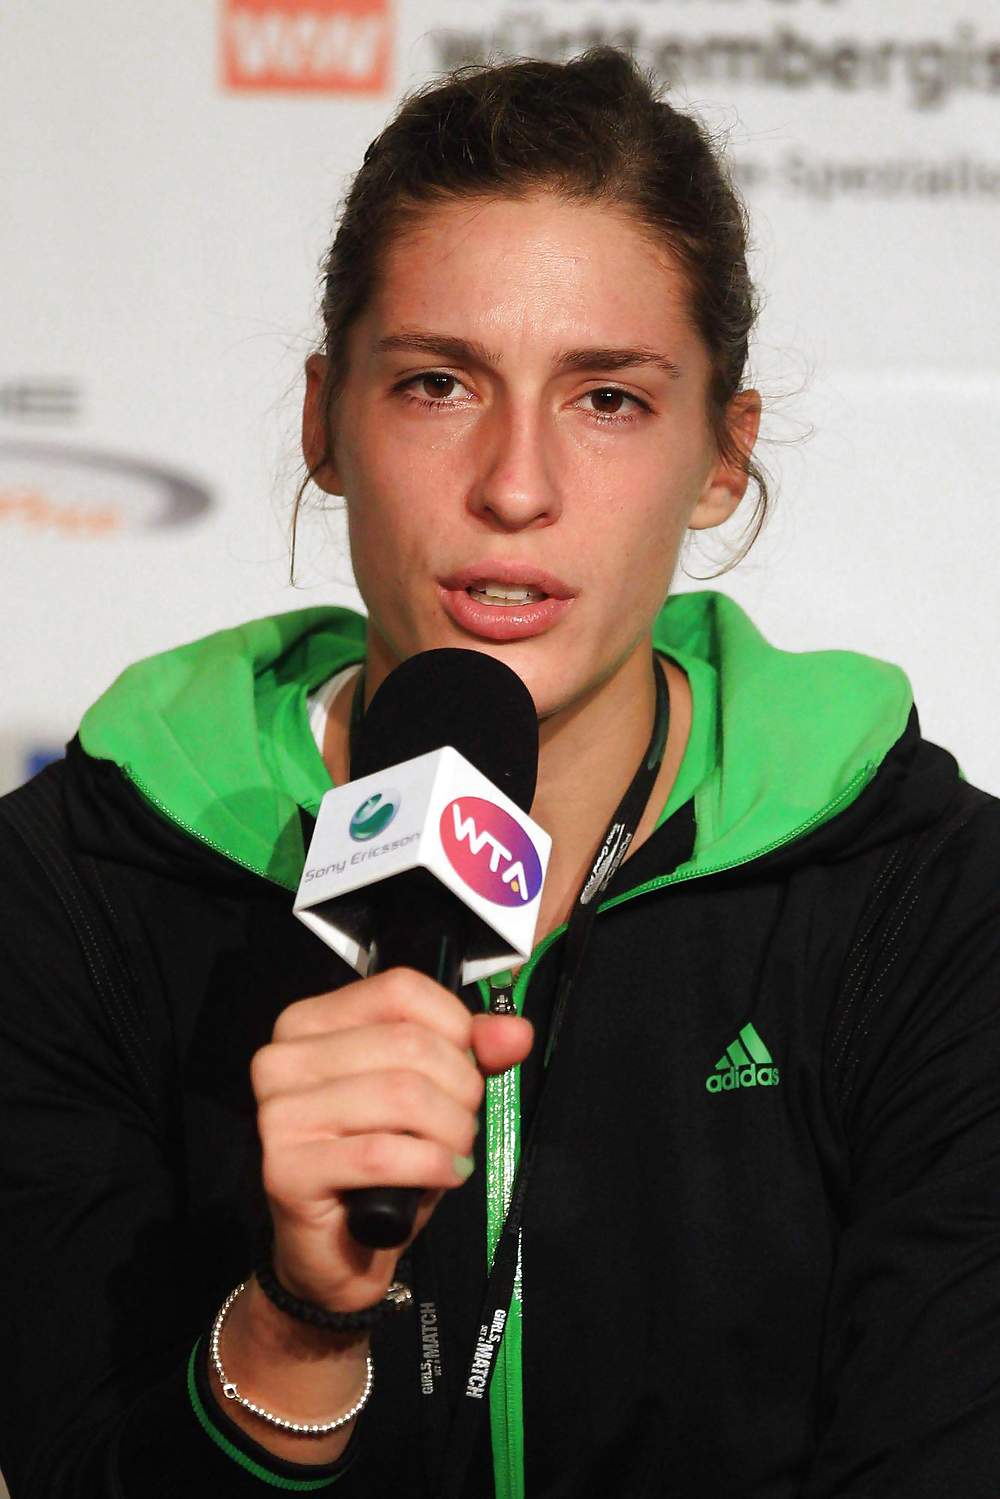 Andrea petkovic - tenista alemana caliente
 #9244221